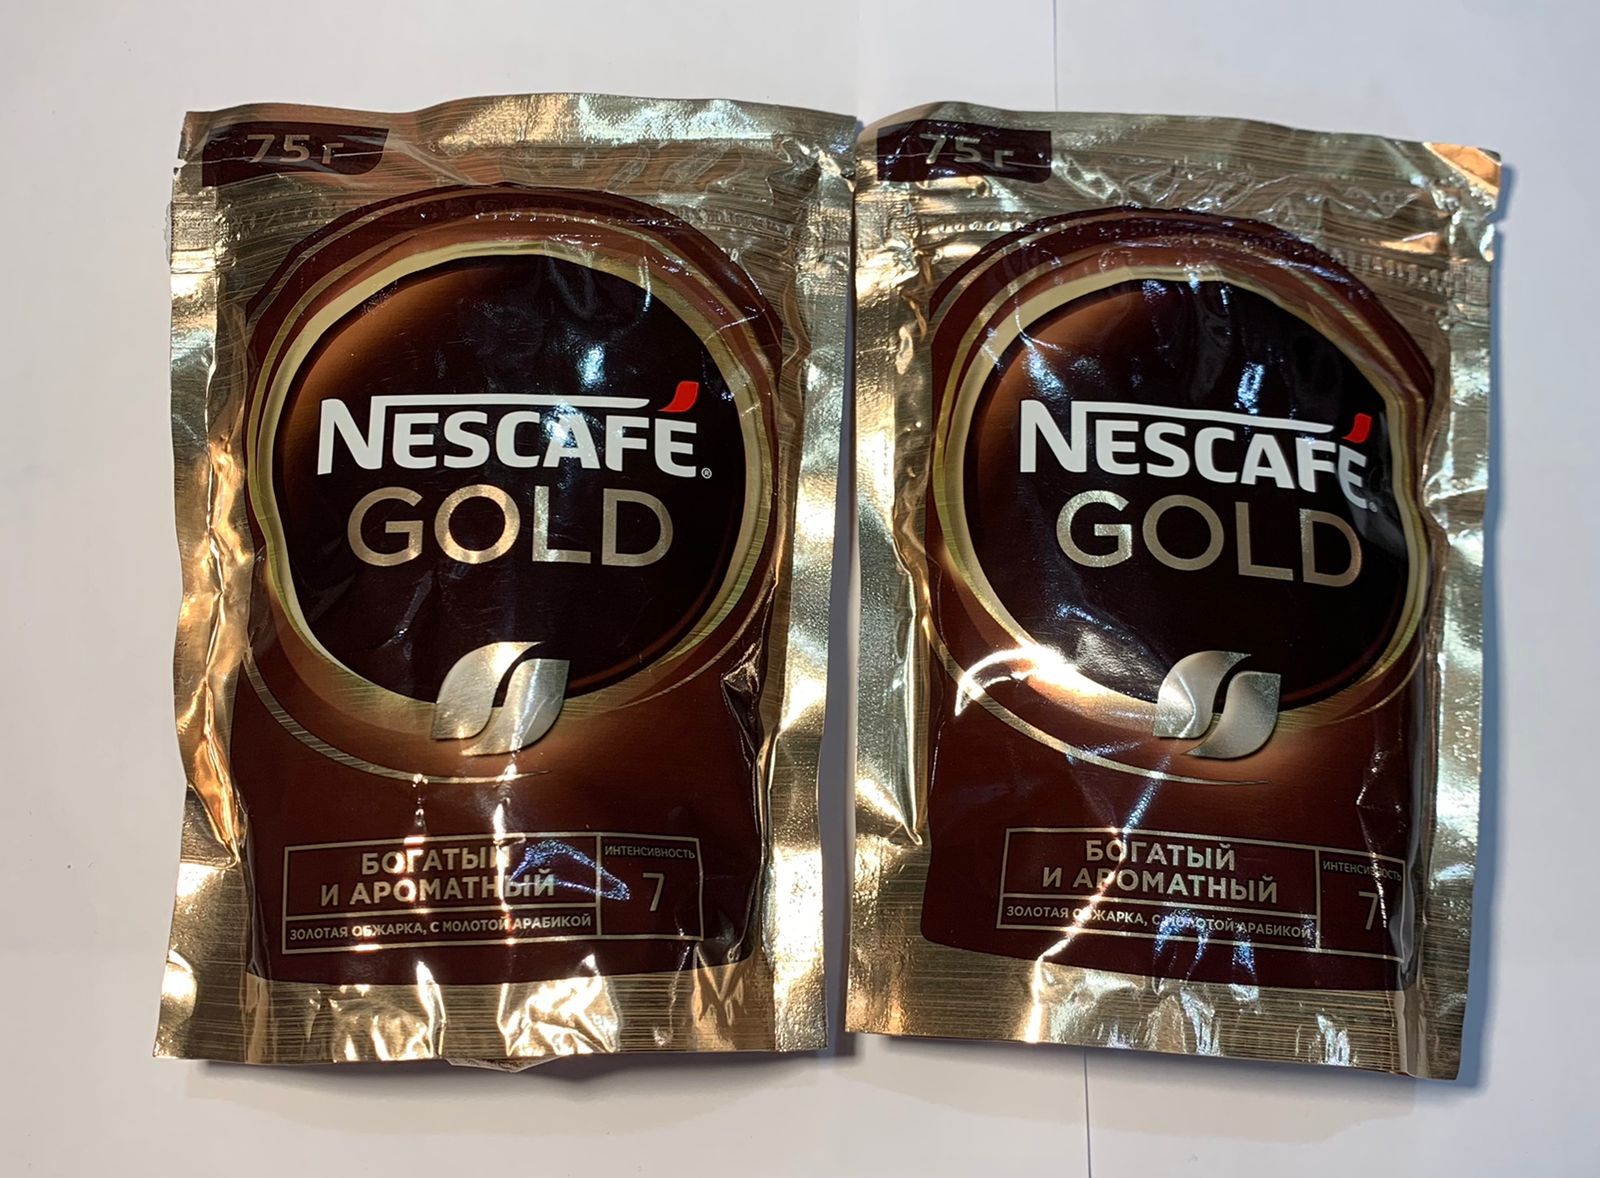 Nescafe gold intenso. Nescafe Gold 75г. Nescafe Gold пакет. Кофе Нескафе Голд в пакетиках. Нескафе Голд растворимый 75 г.